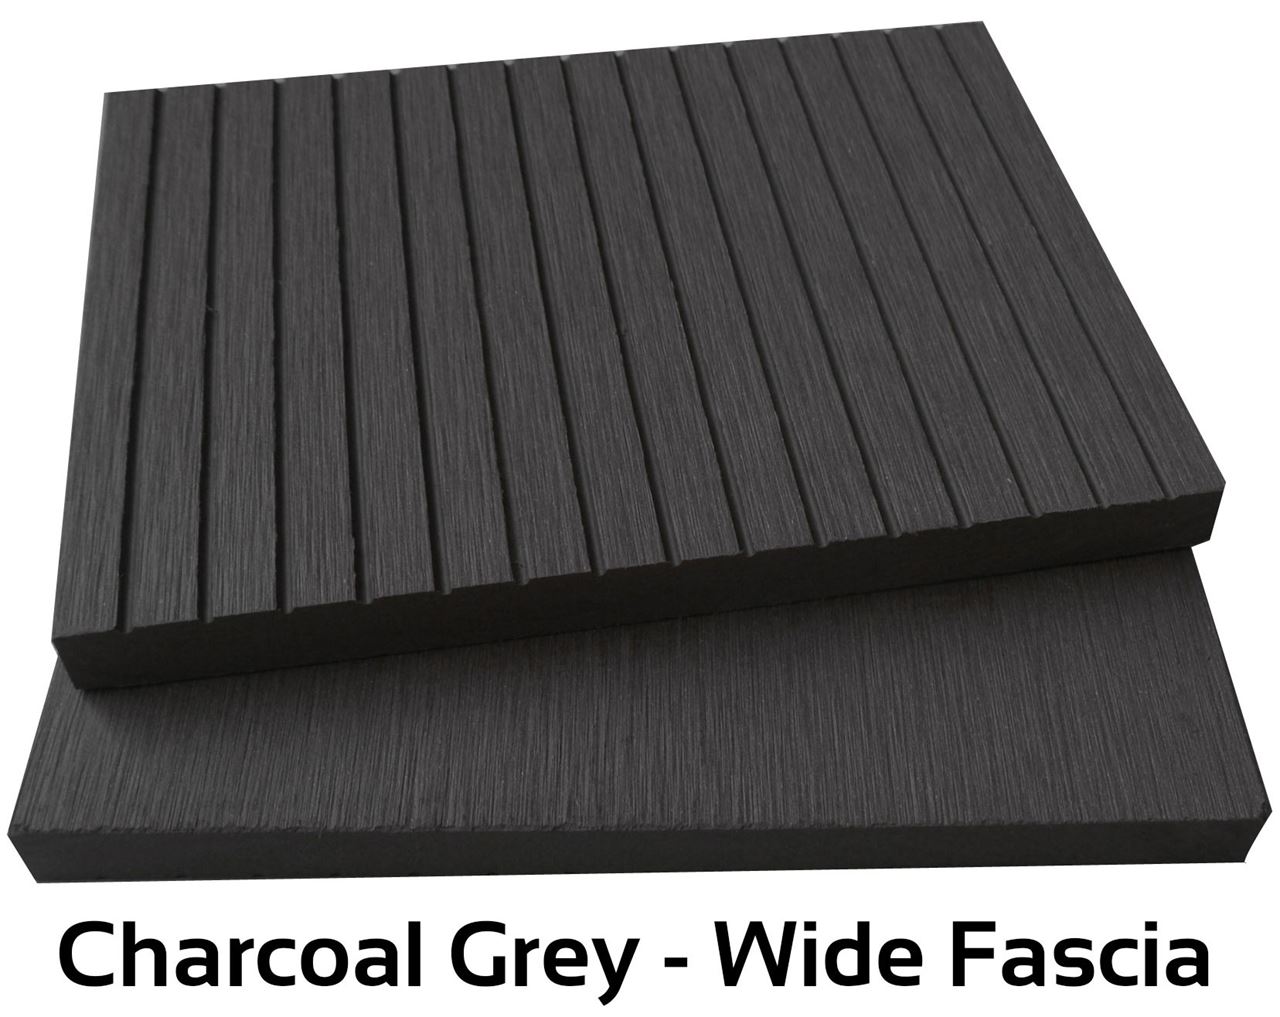 Charcoal Grey Wide Fascia Board Composite Decking Cladding And Fascia